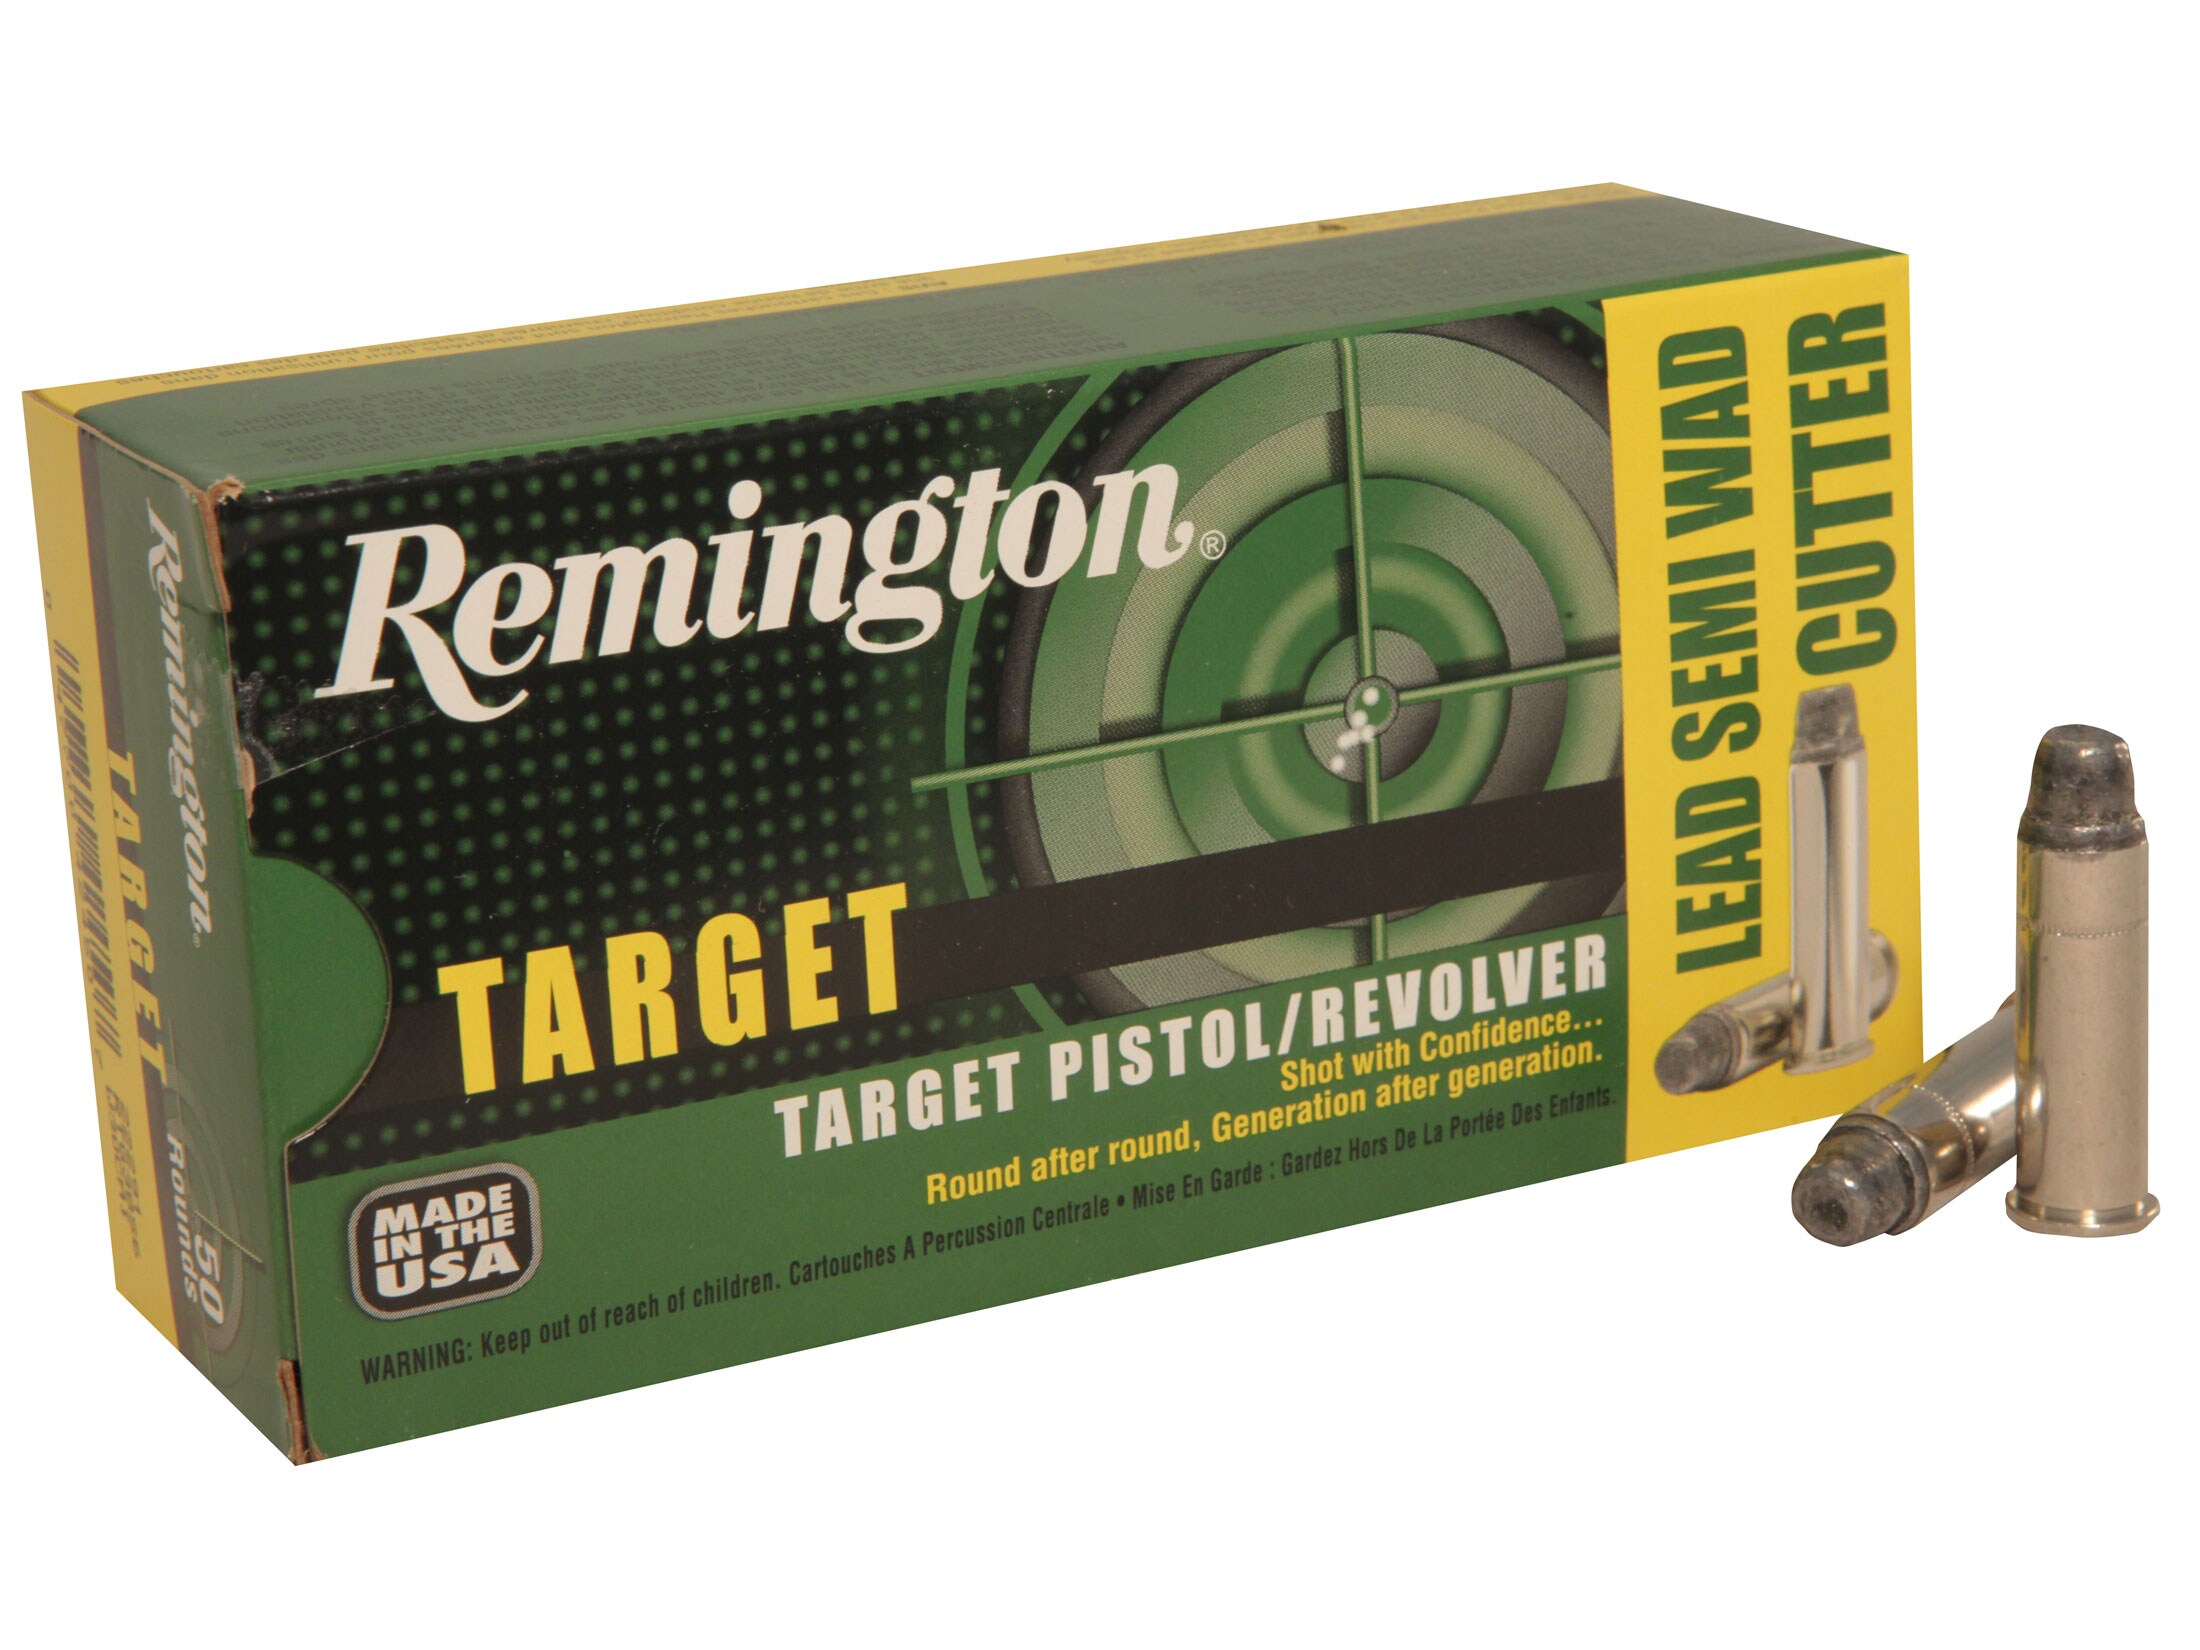 Remington Target 357 Mag Ammo 158 Grain Semi-Wadcutter Box of 50